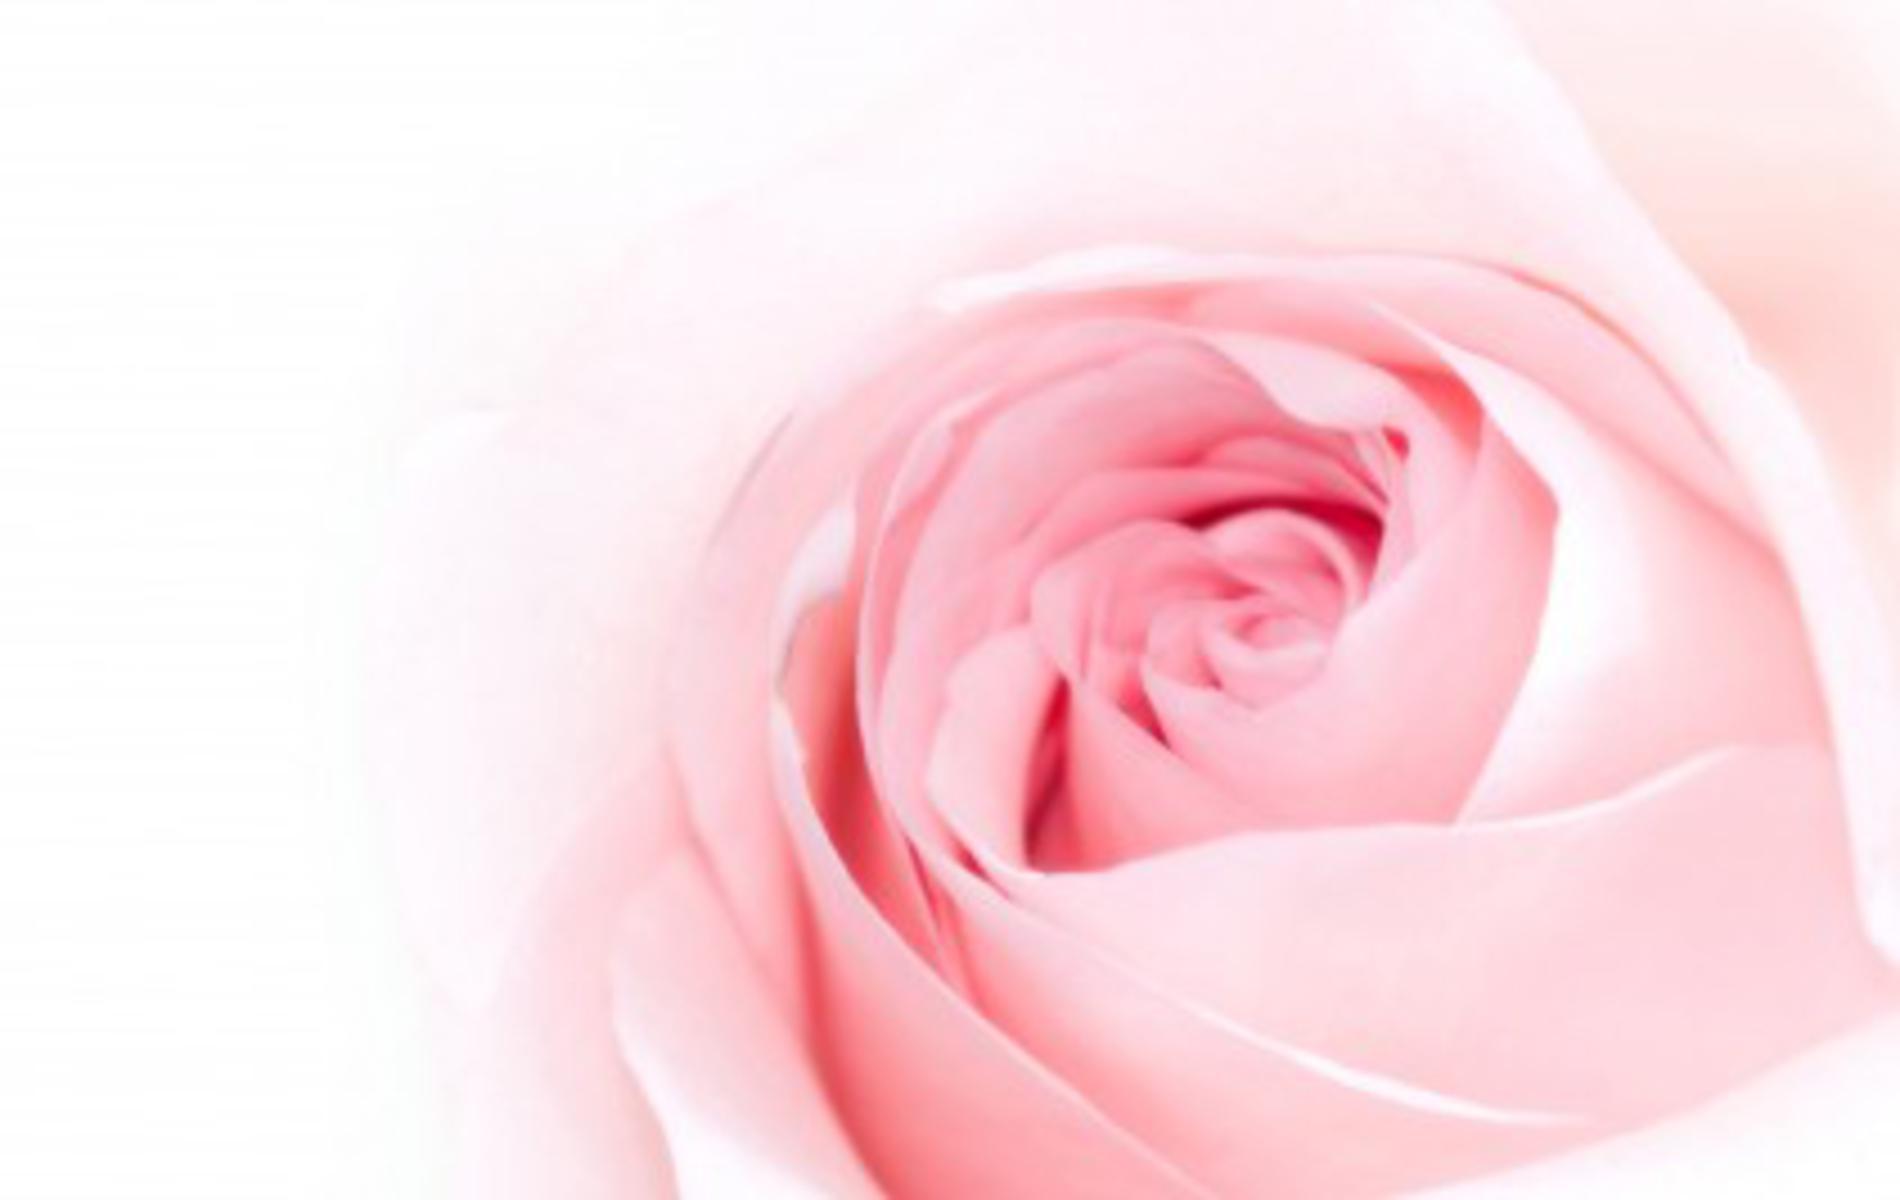 Pink Rose Background